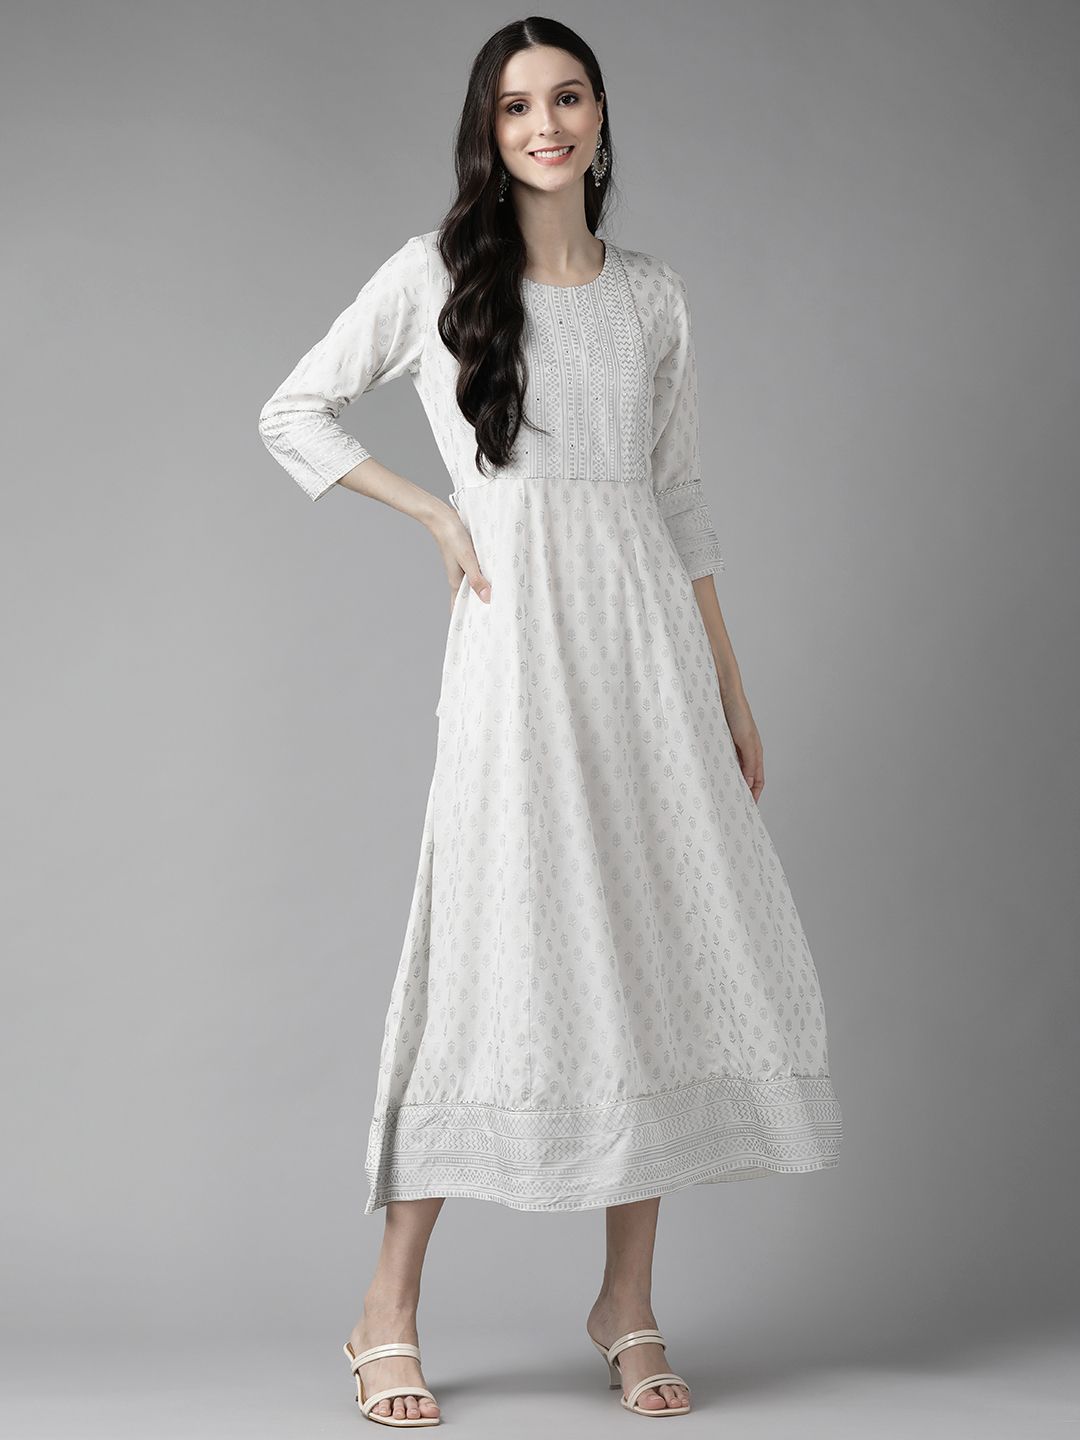 Yufta White Ethnic Motifs Mirror Work Ethnic A-Line Midi Dress Price in India